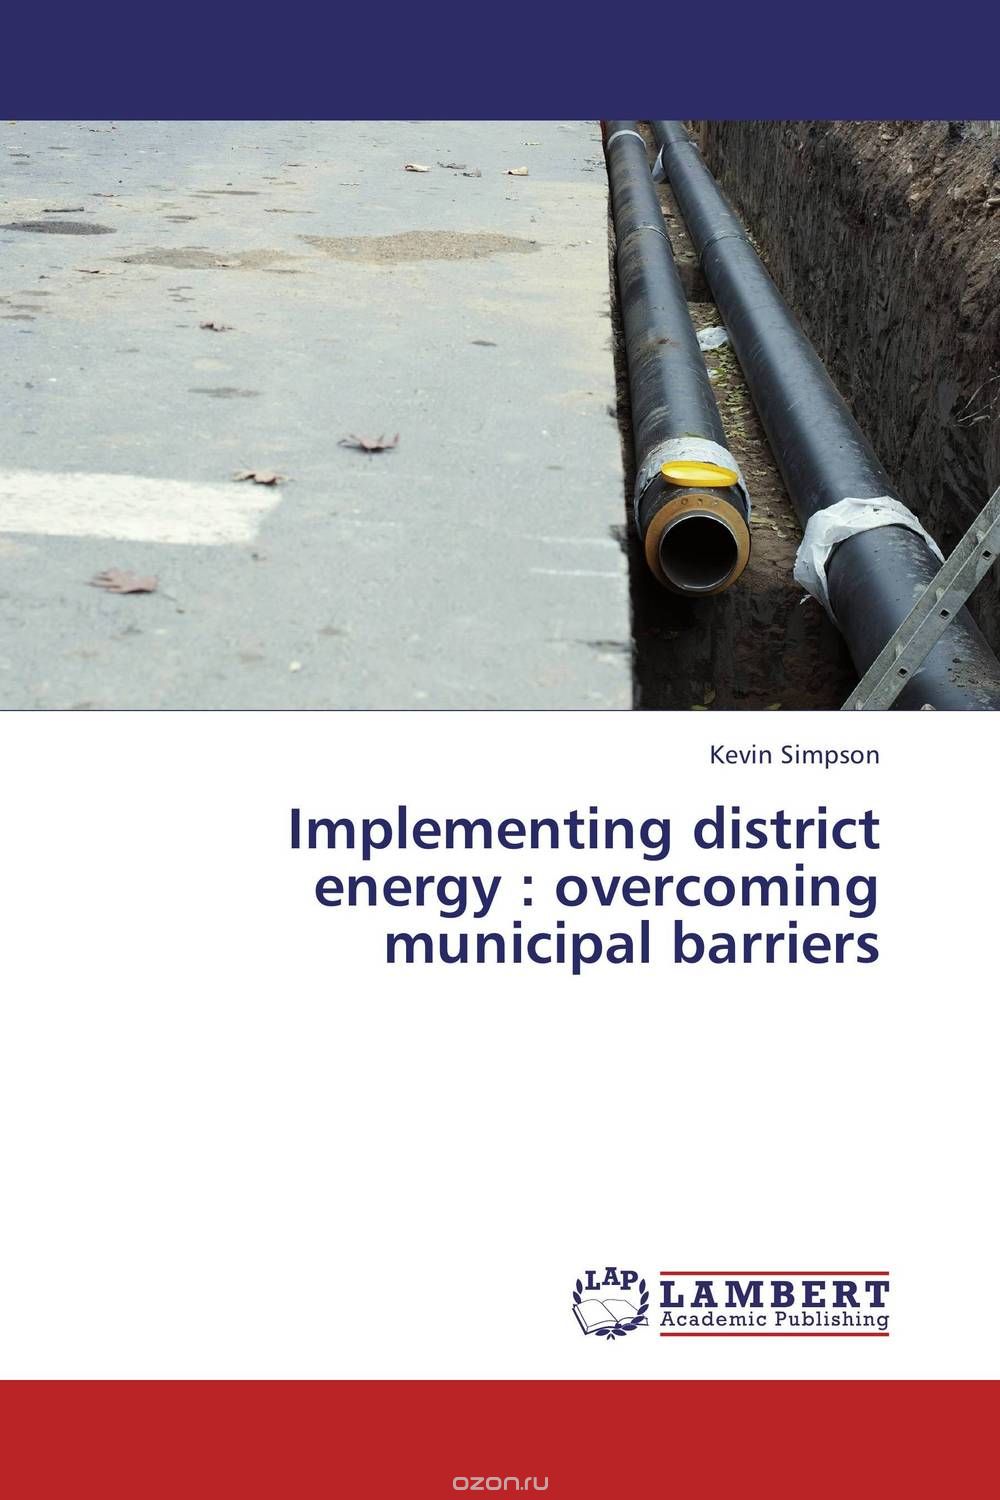 Скачать книгу "Implementing district energy : overcoming municipal barriers"